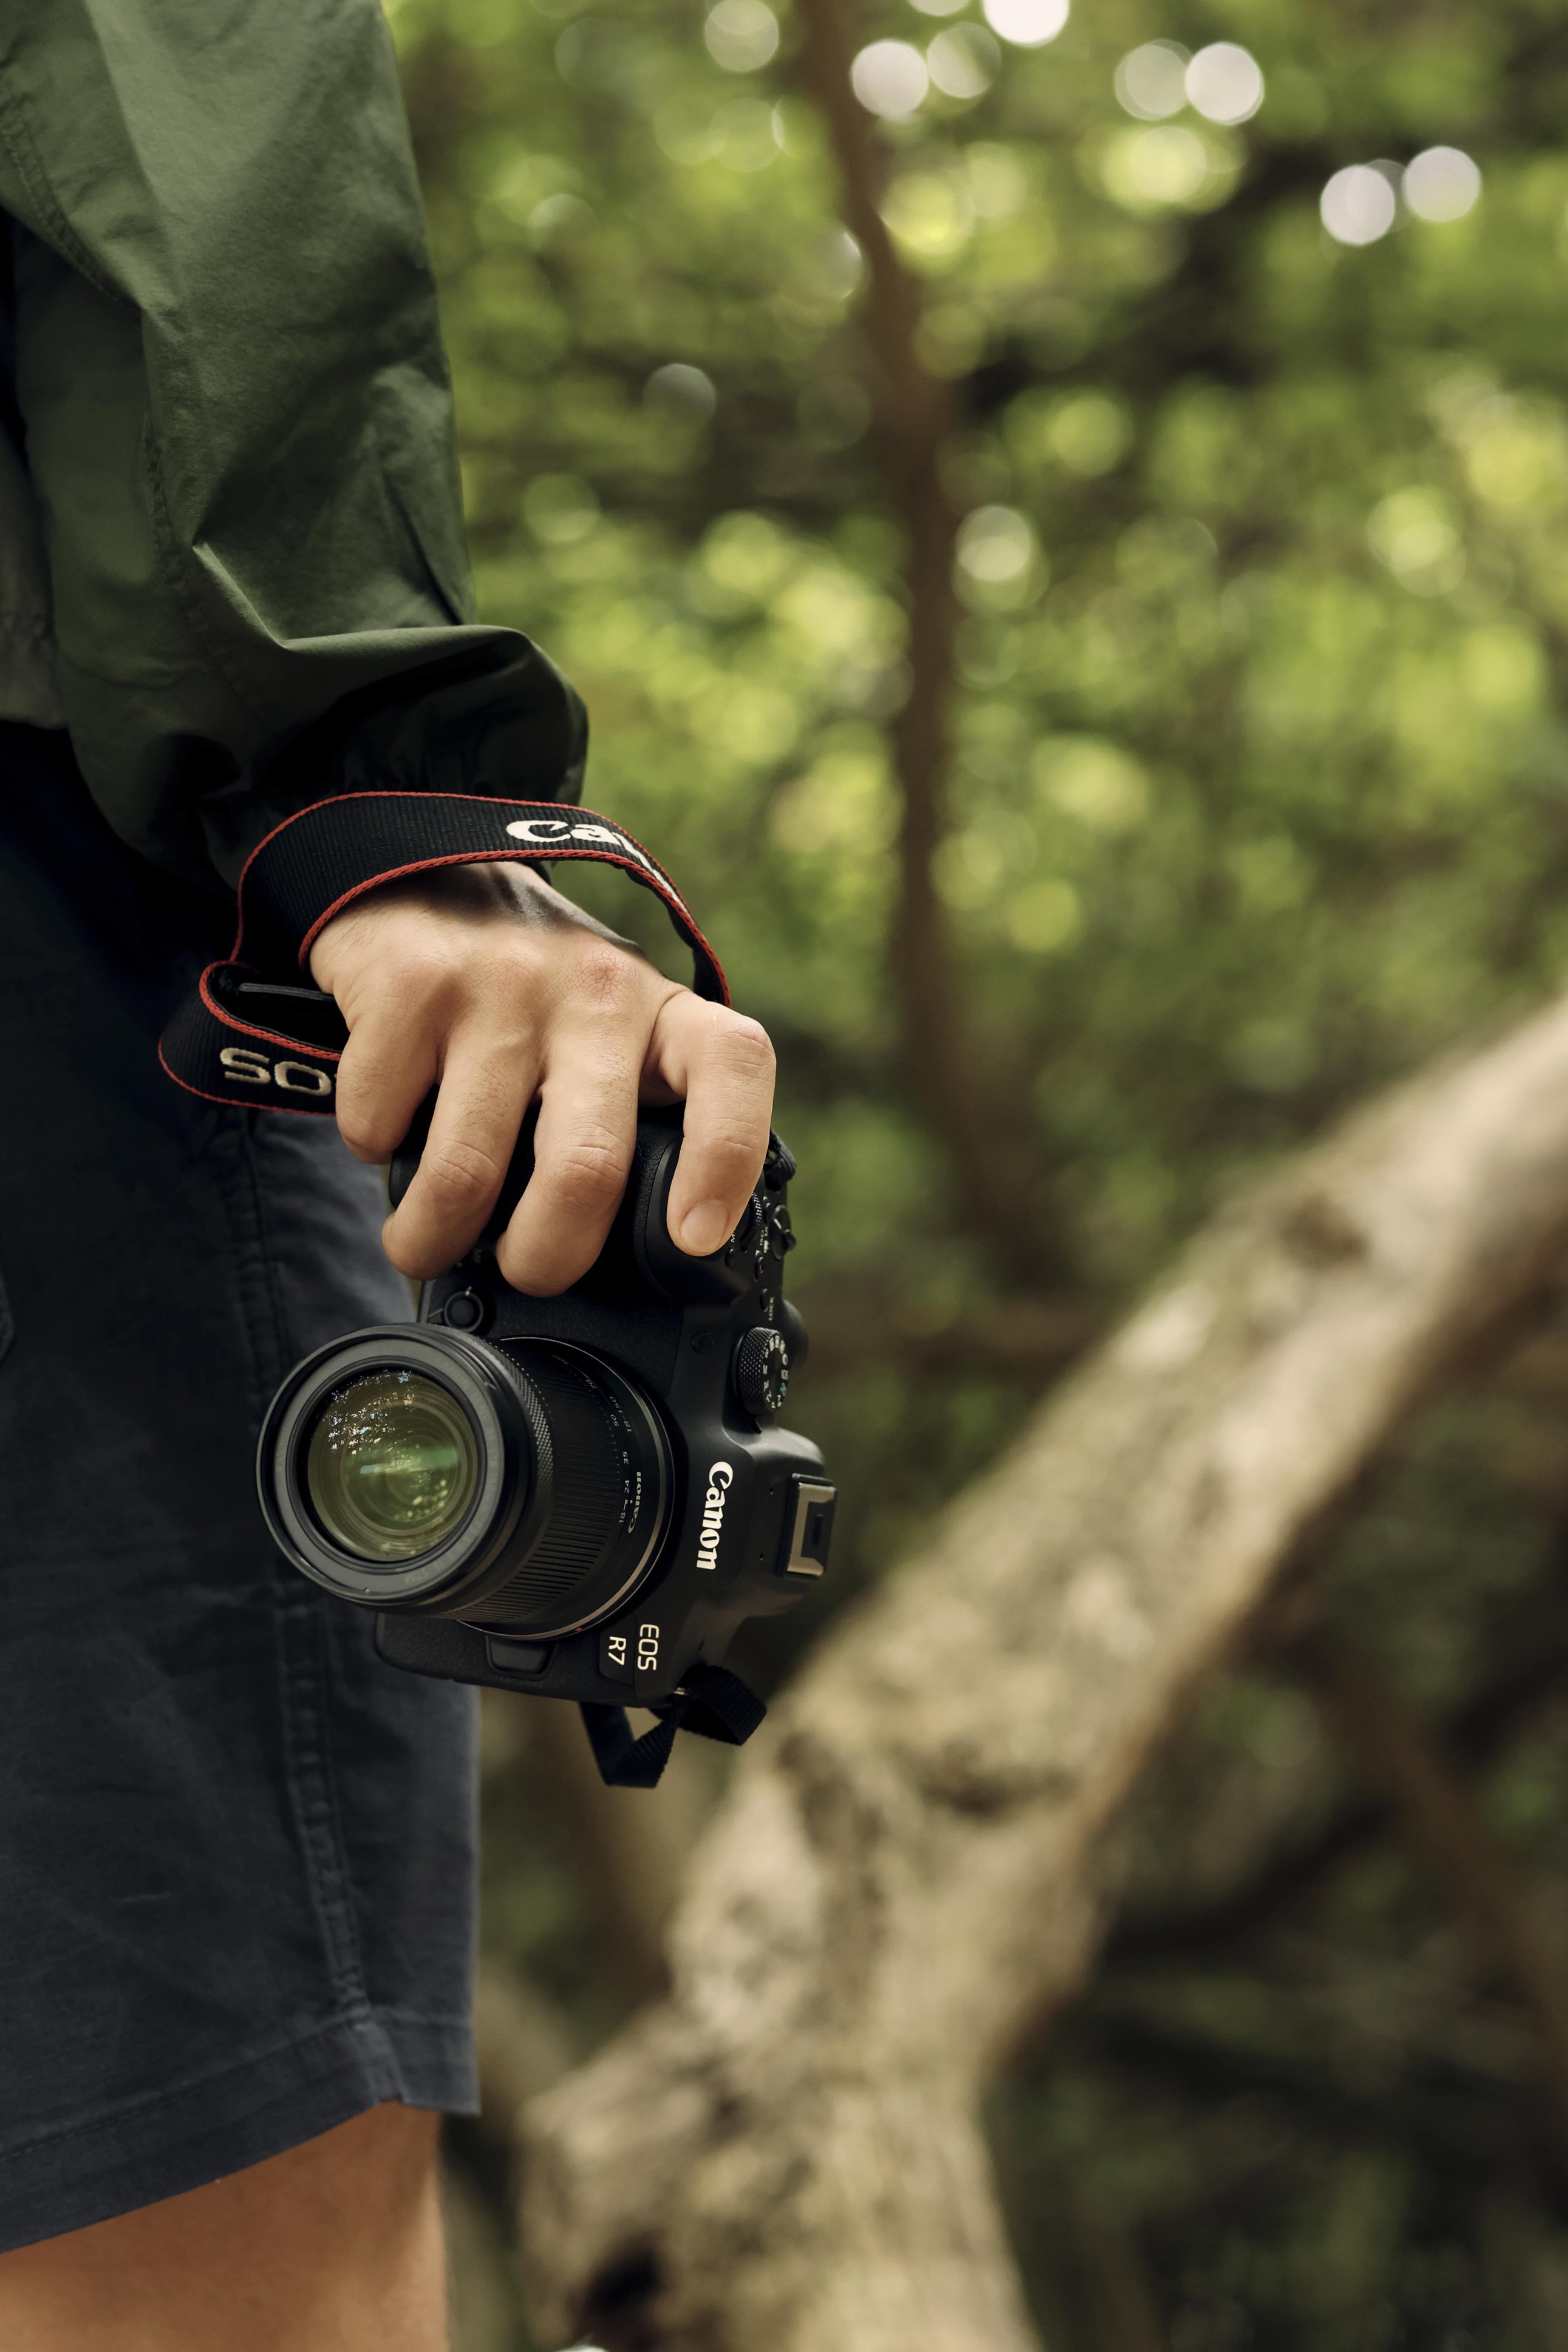  Canon EOS R7 Body Mirrorless Camera (International Model)  (Renewed) : Electronics